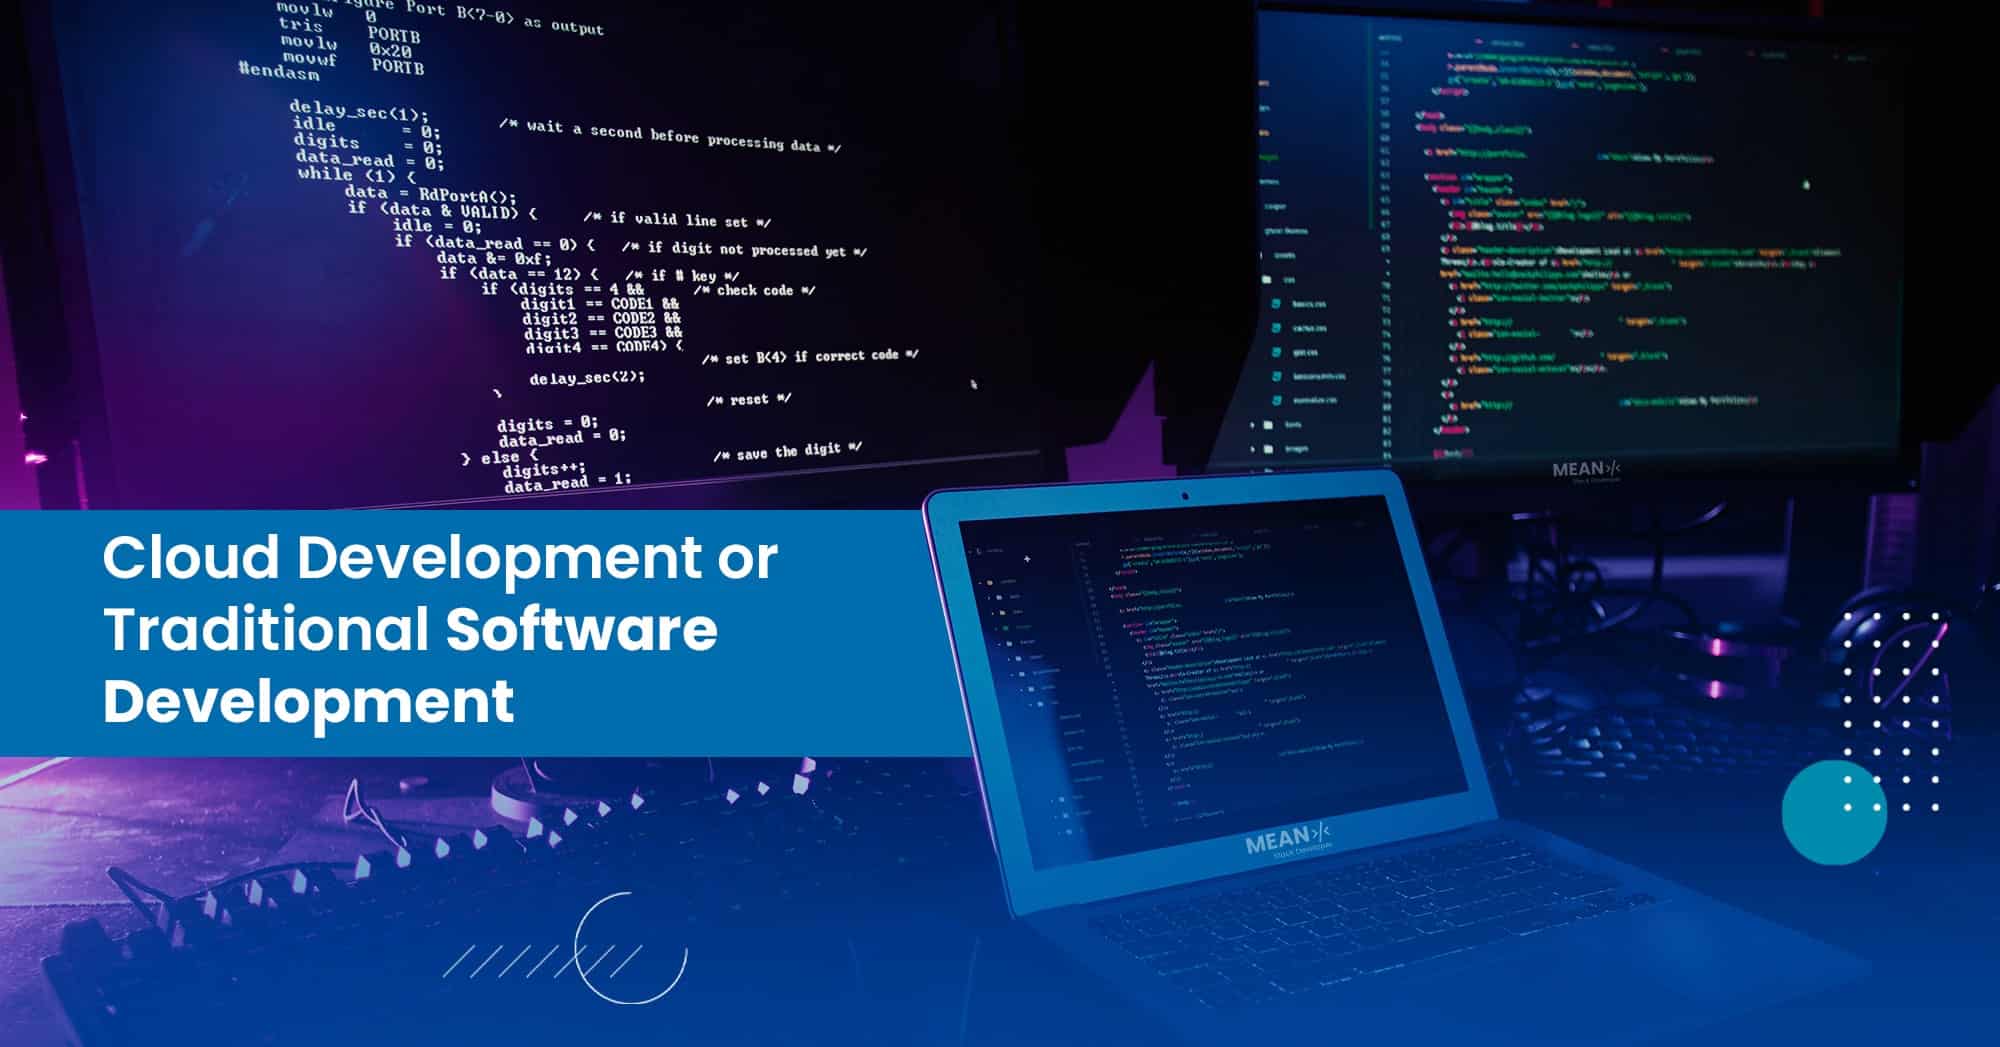 Cloud development or traditional software development